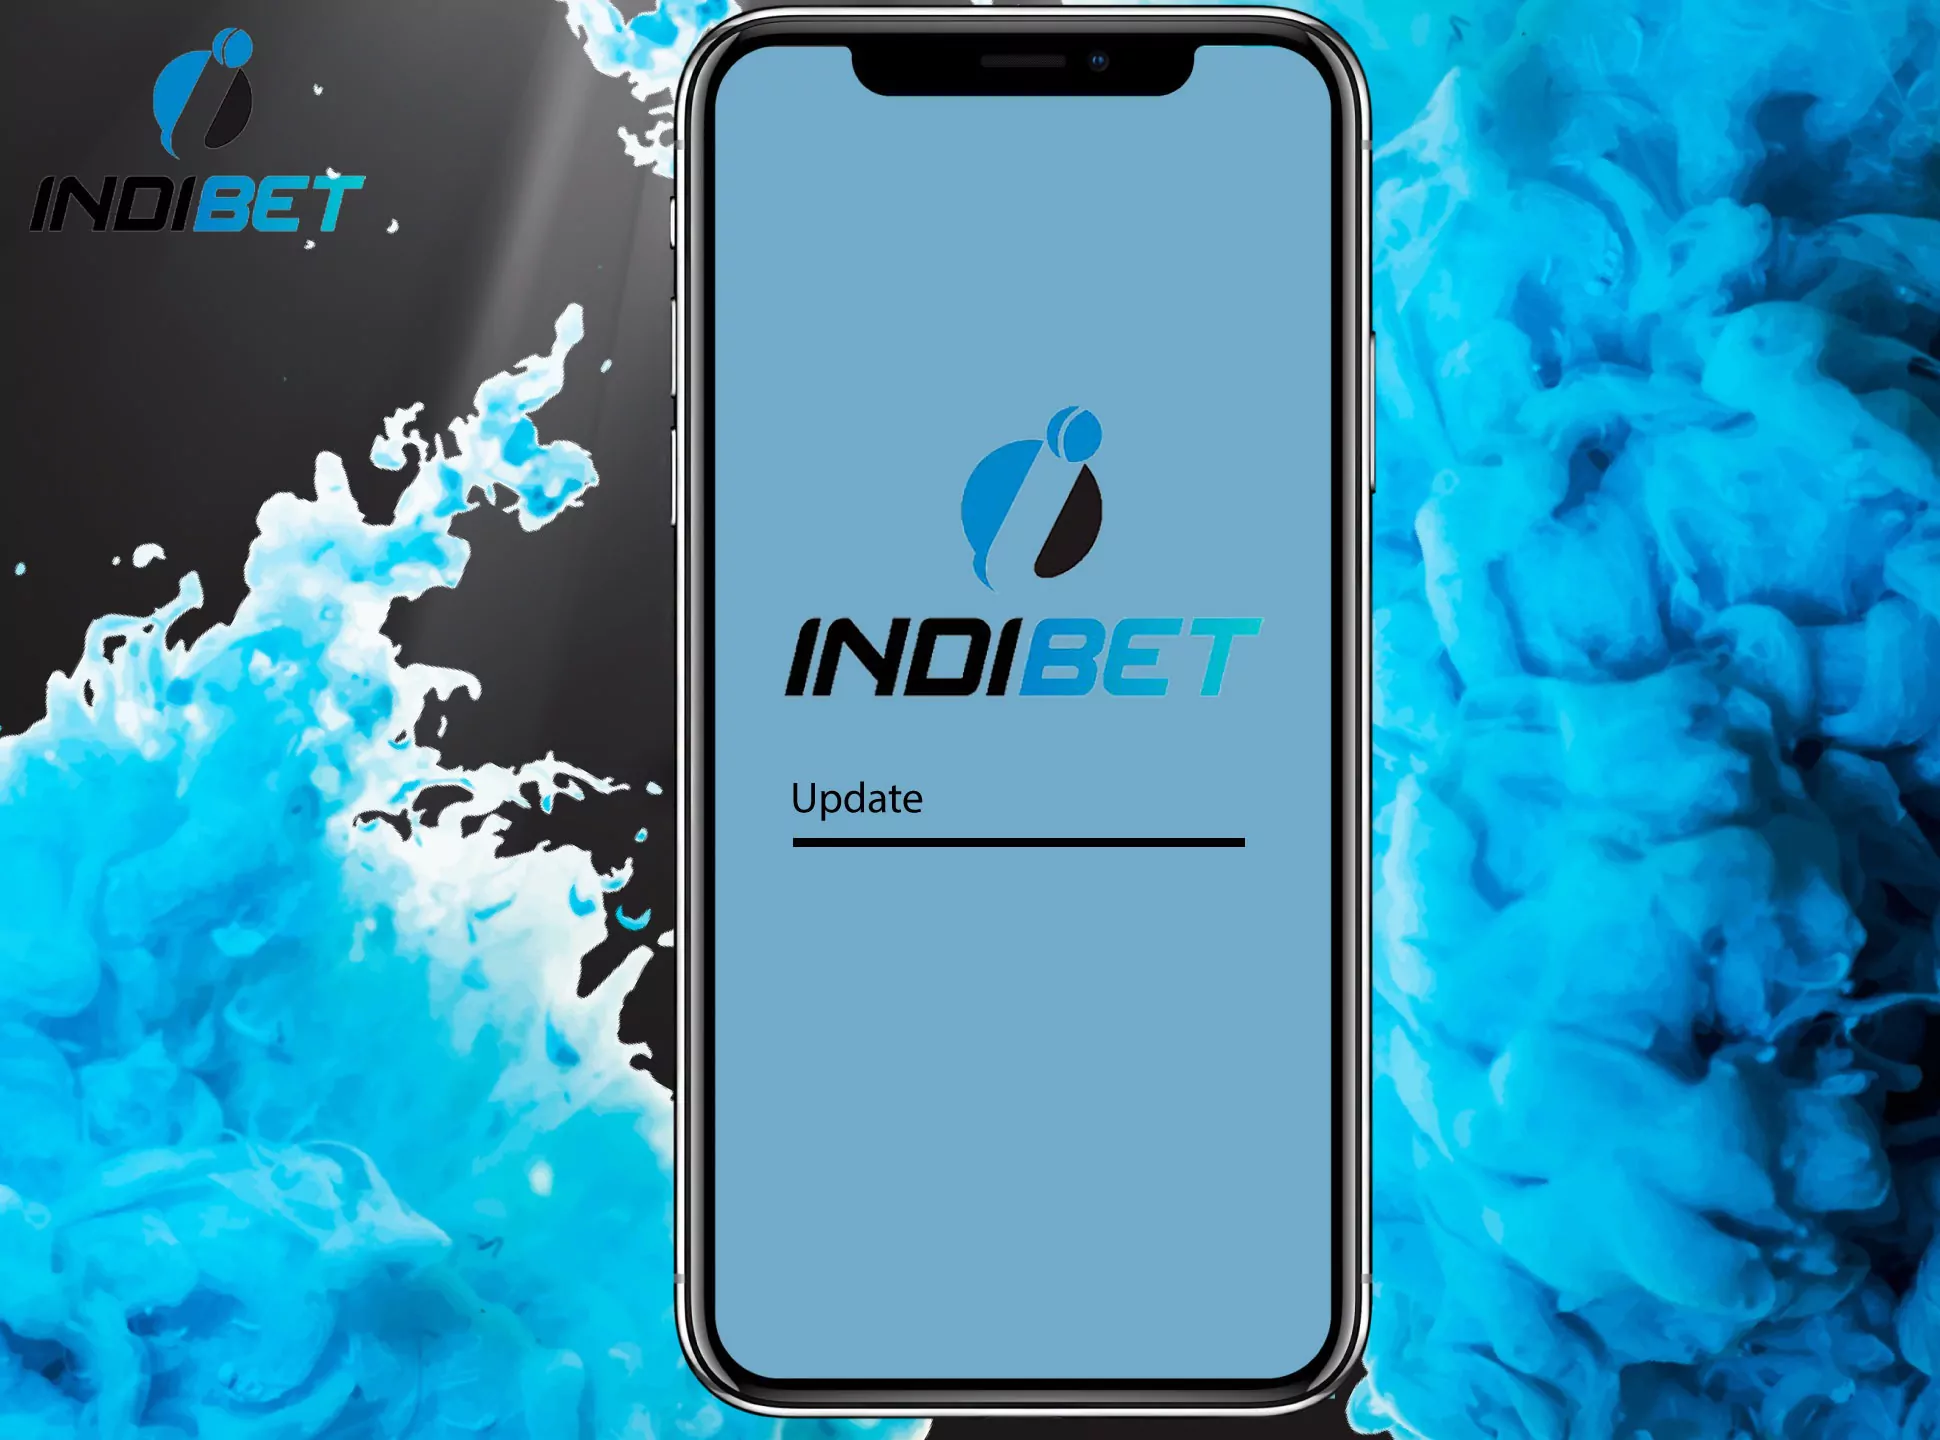 Indibet app updates automatically.